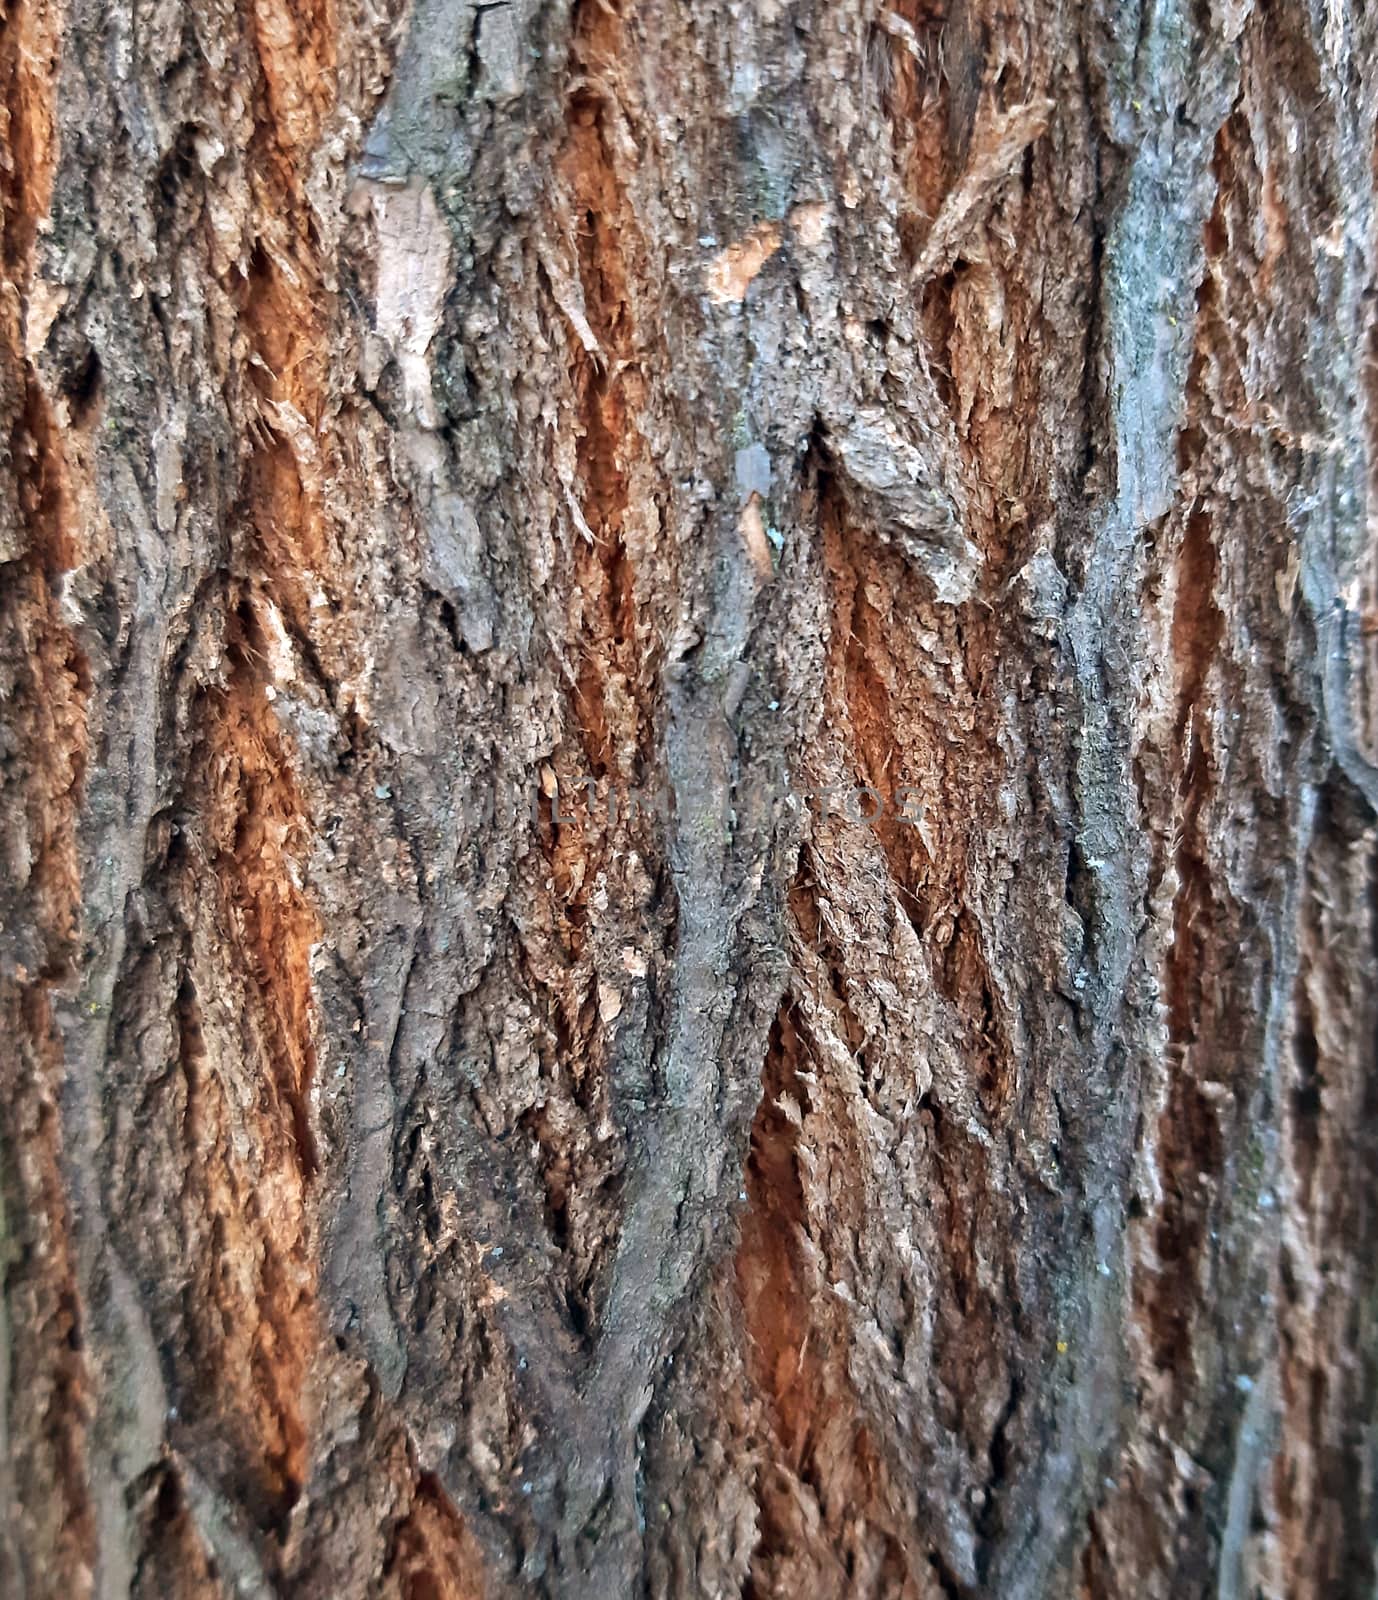 Acacia bark texture close up, young tree by Mindru